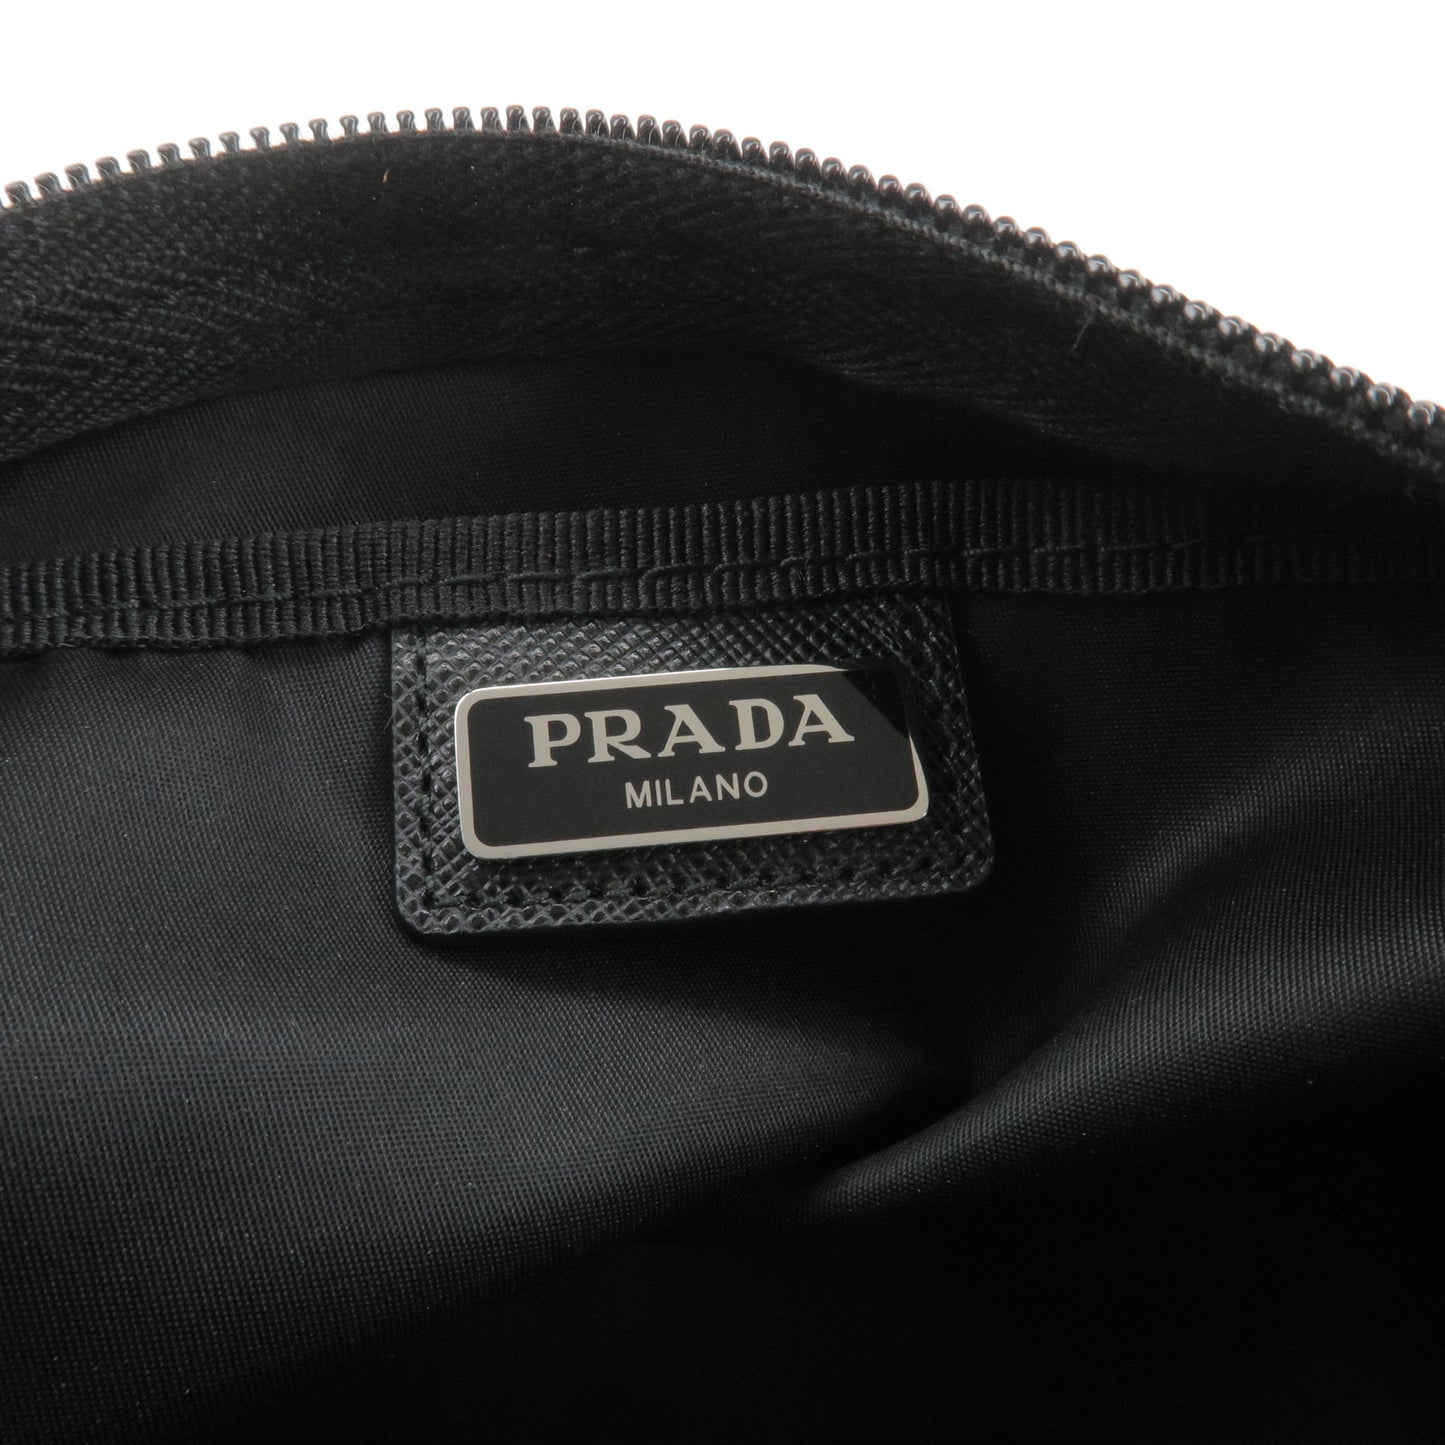 PRADA Logo Nylon Leather Pouch Clutch Bag NERO Black 1NA350